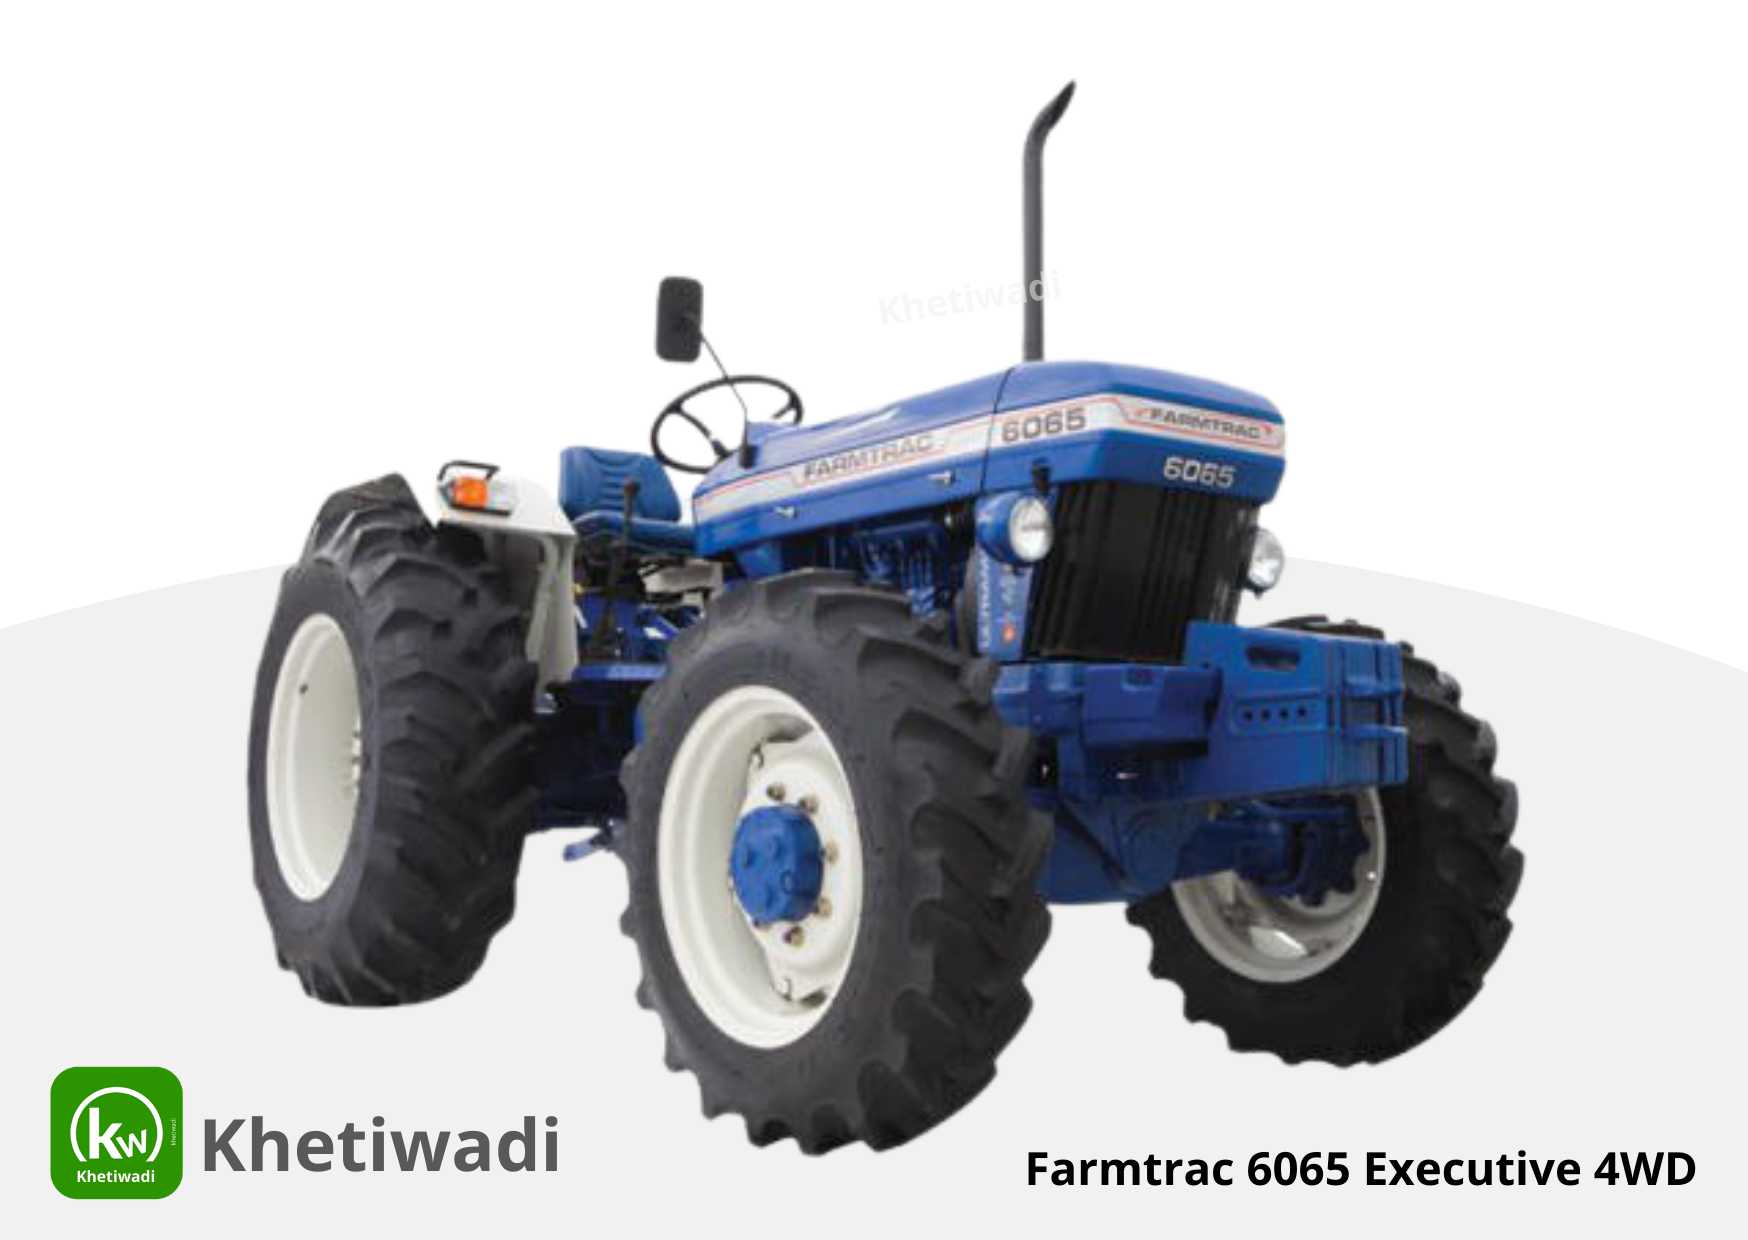 Farmtrac 6065 Executive 4WD full detail